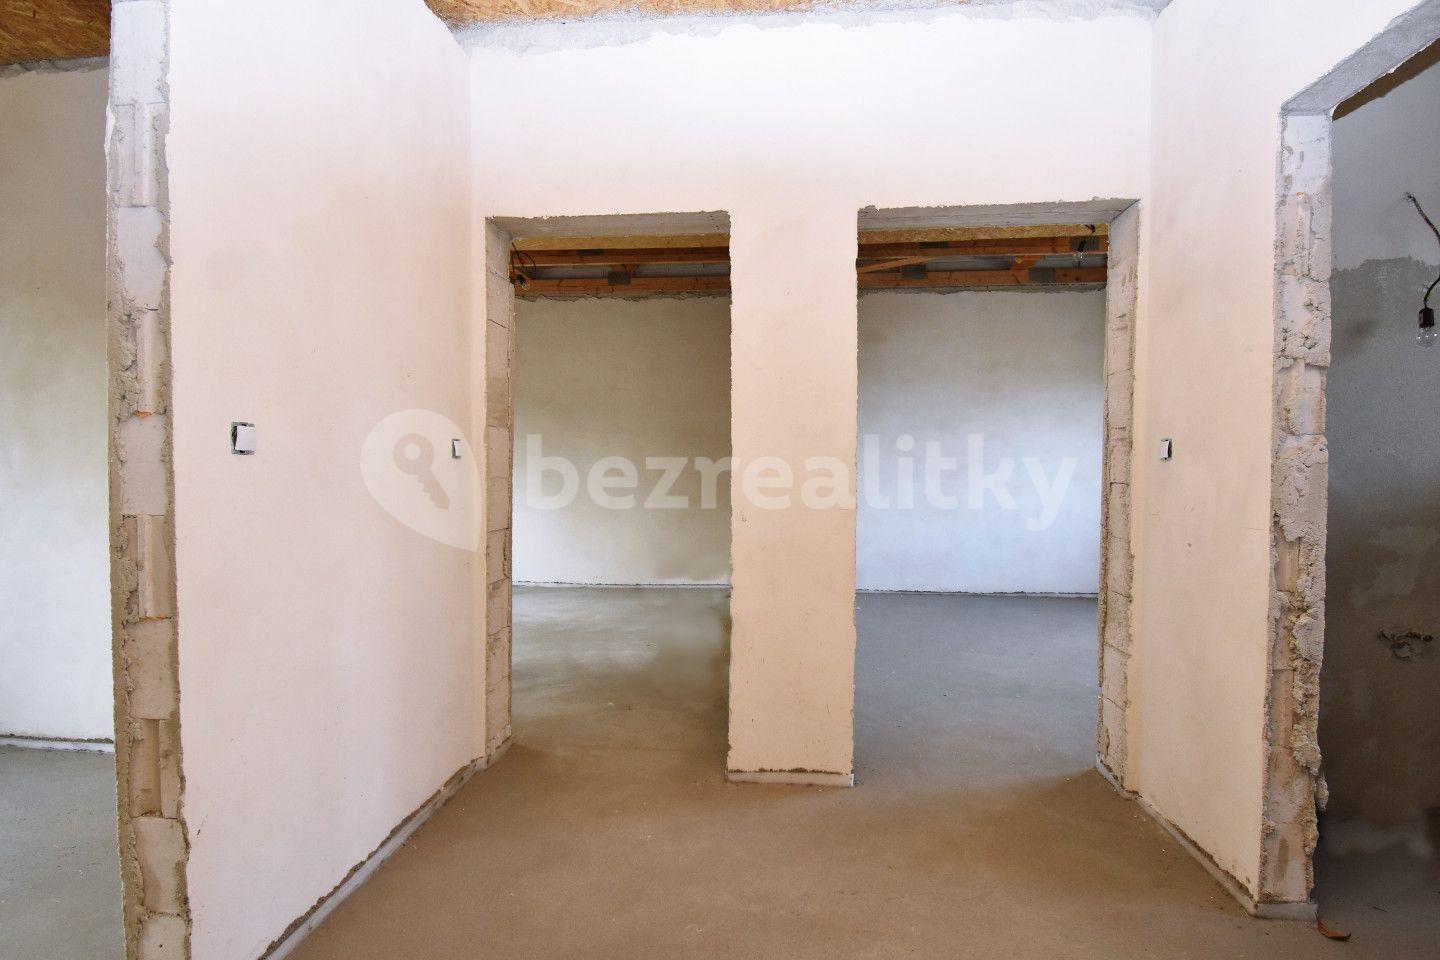 Predaj domu 104 m², pozemek 1.200 m², Ralsko, Liberecký kraj